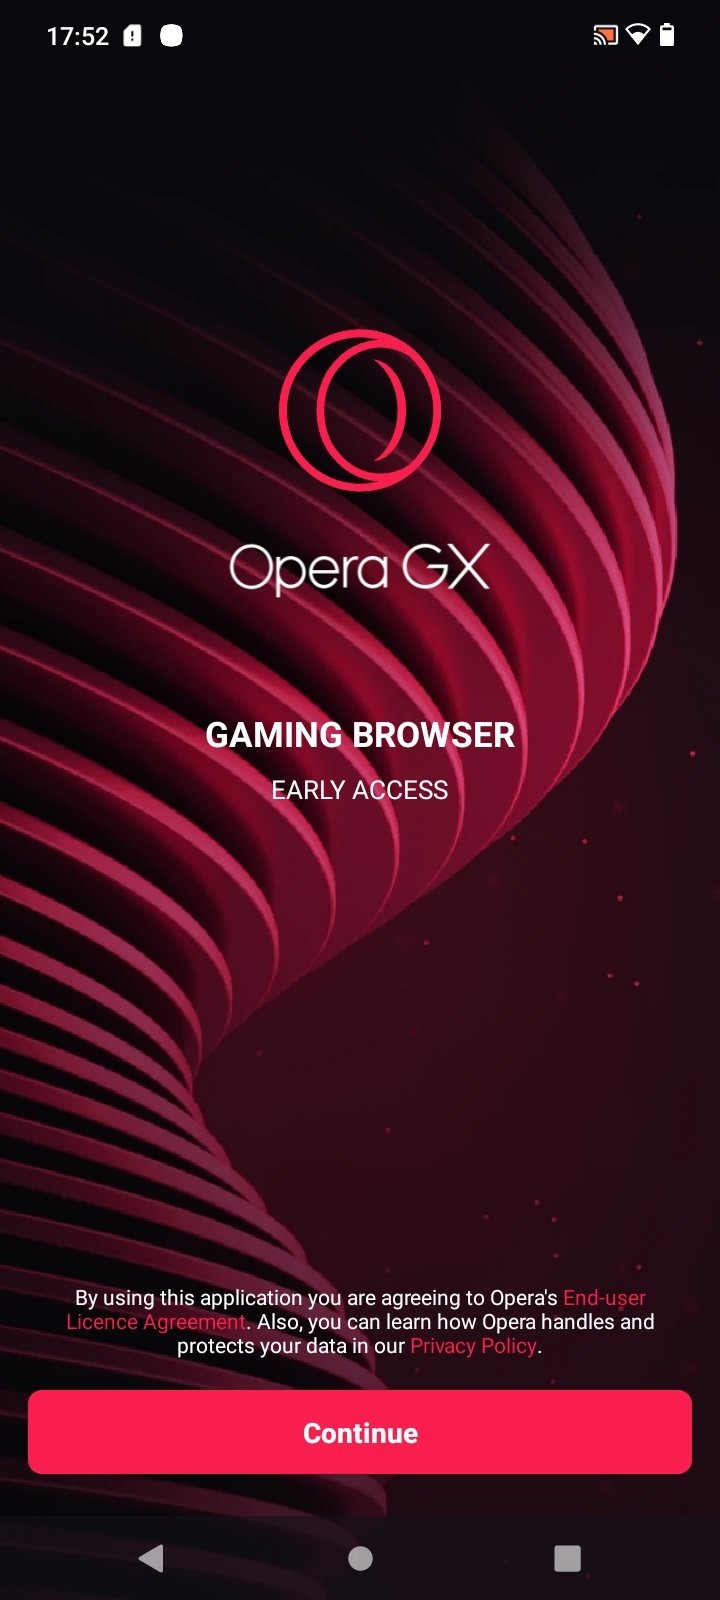 download the new Opera GX 101.0.4843.55